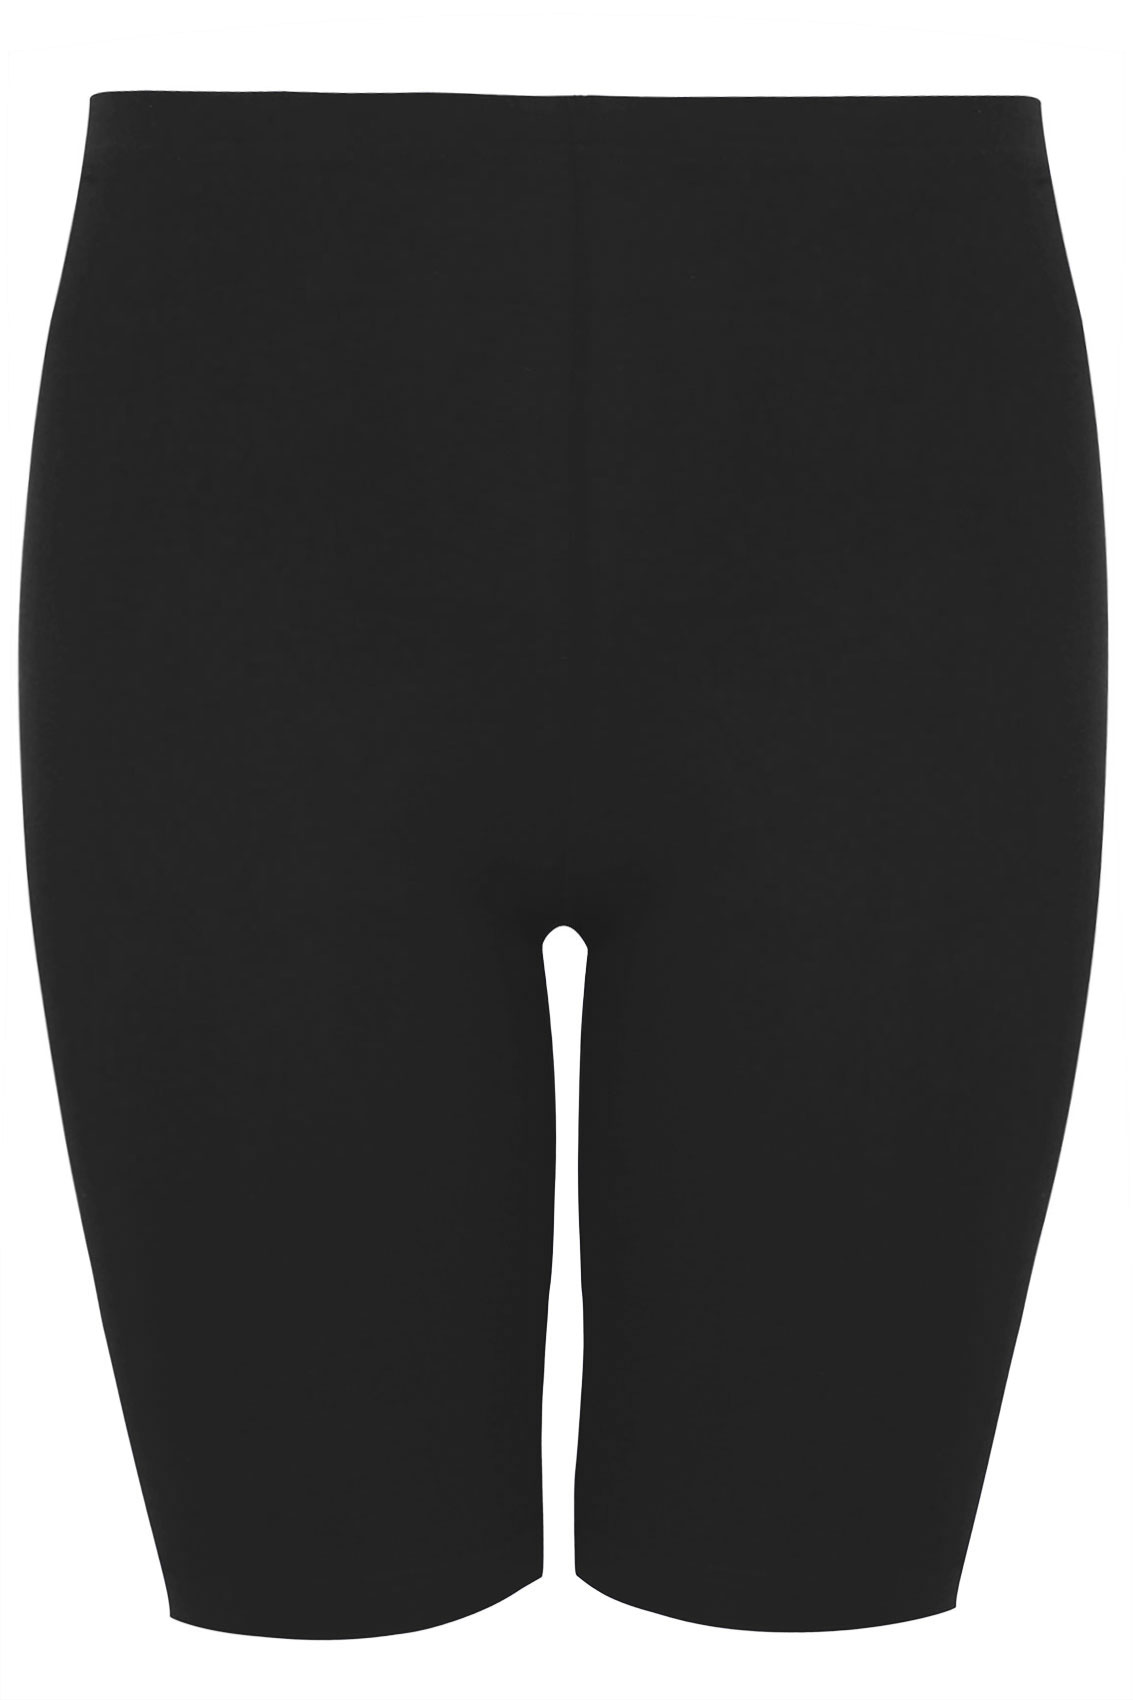 KOGMO Womens Premium Cotton Comfortable Stretch Shorts Leggings 8in In